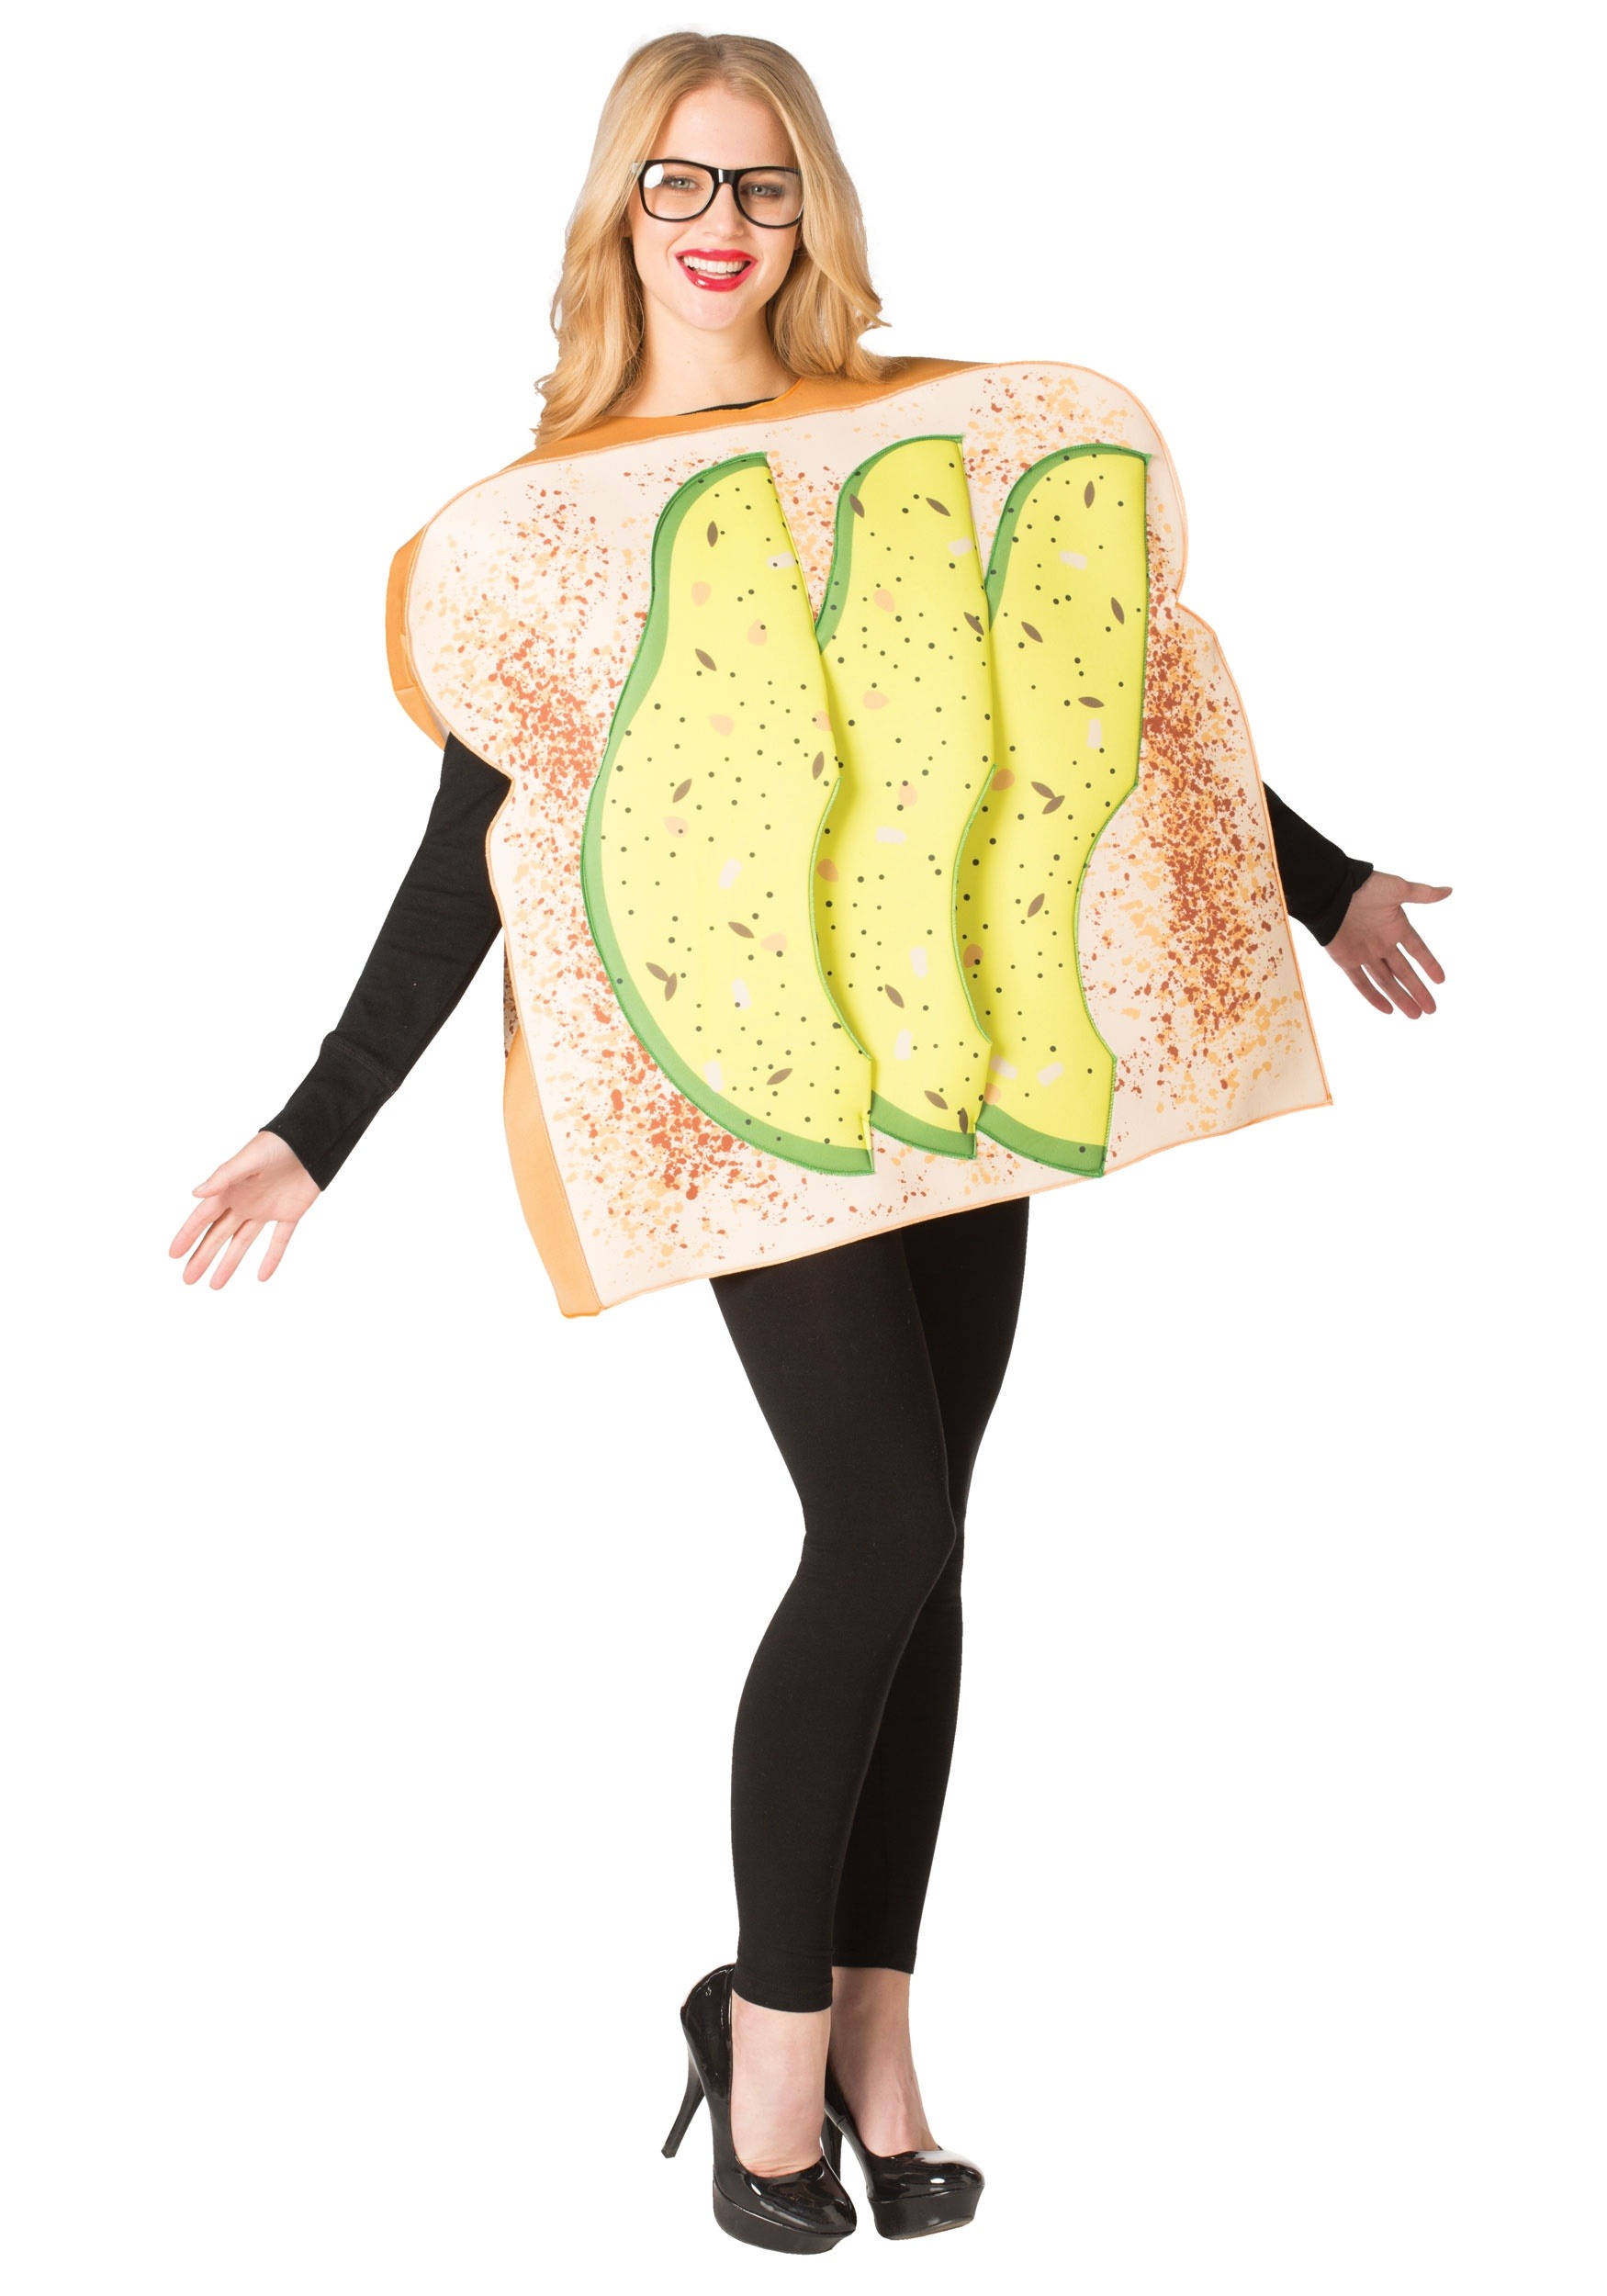 Avocado Toast Adult Fancy Dress Costume , Food Fancy Dress Costumes